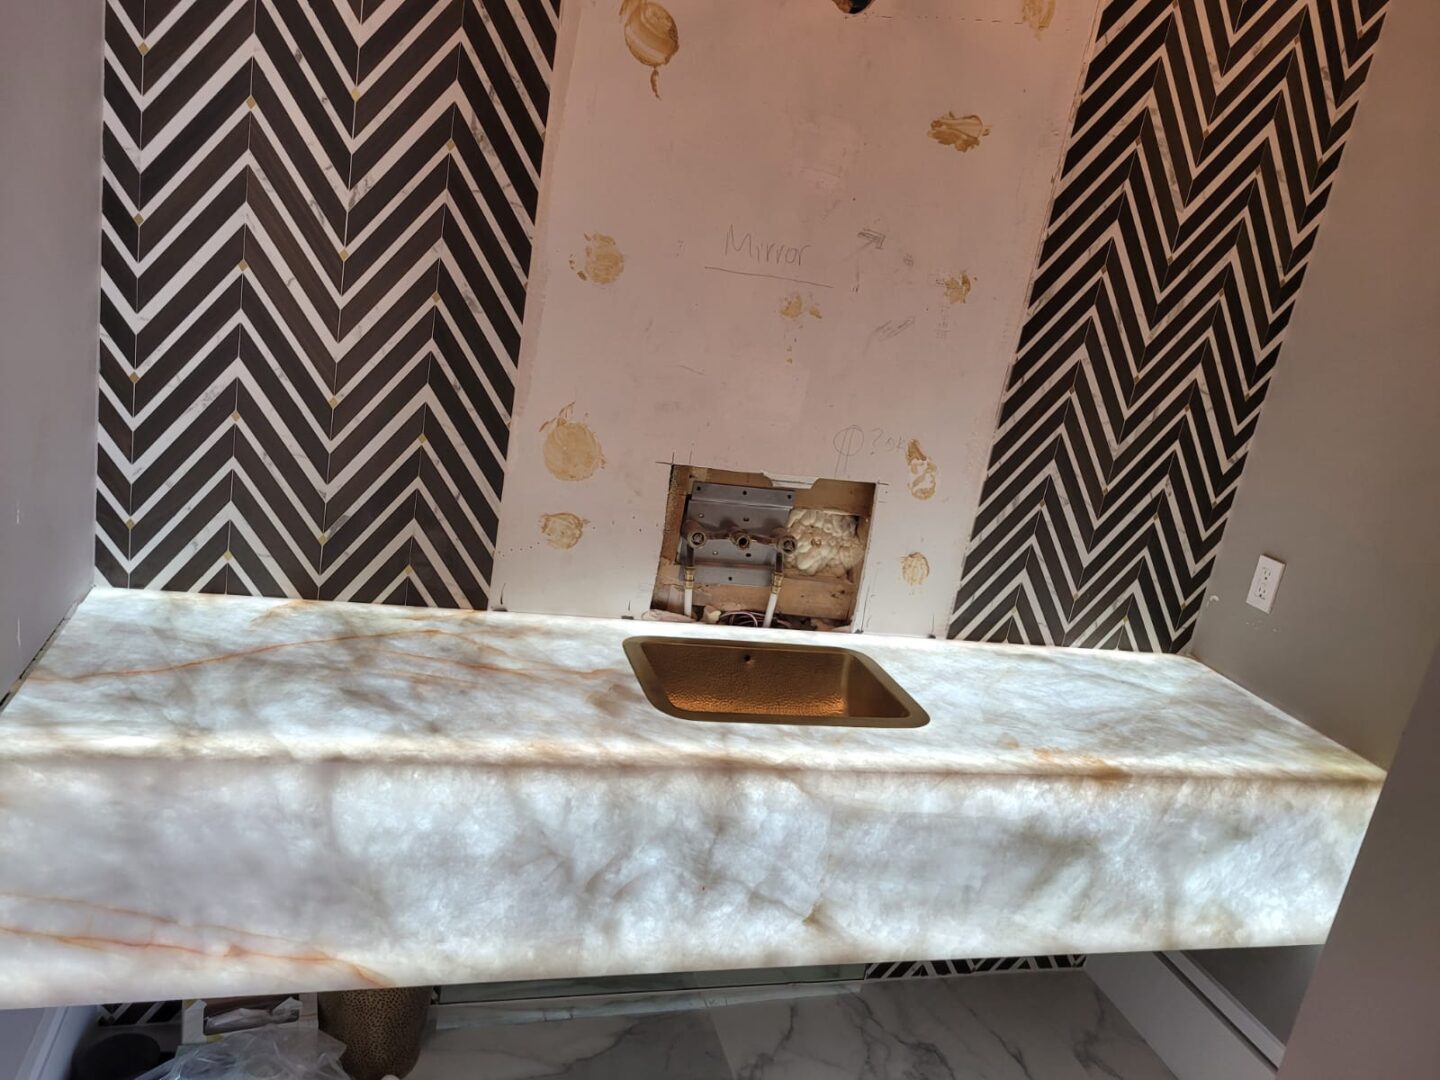 A bathroom sink with a rusty metal lid.